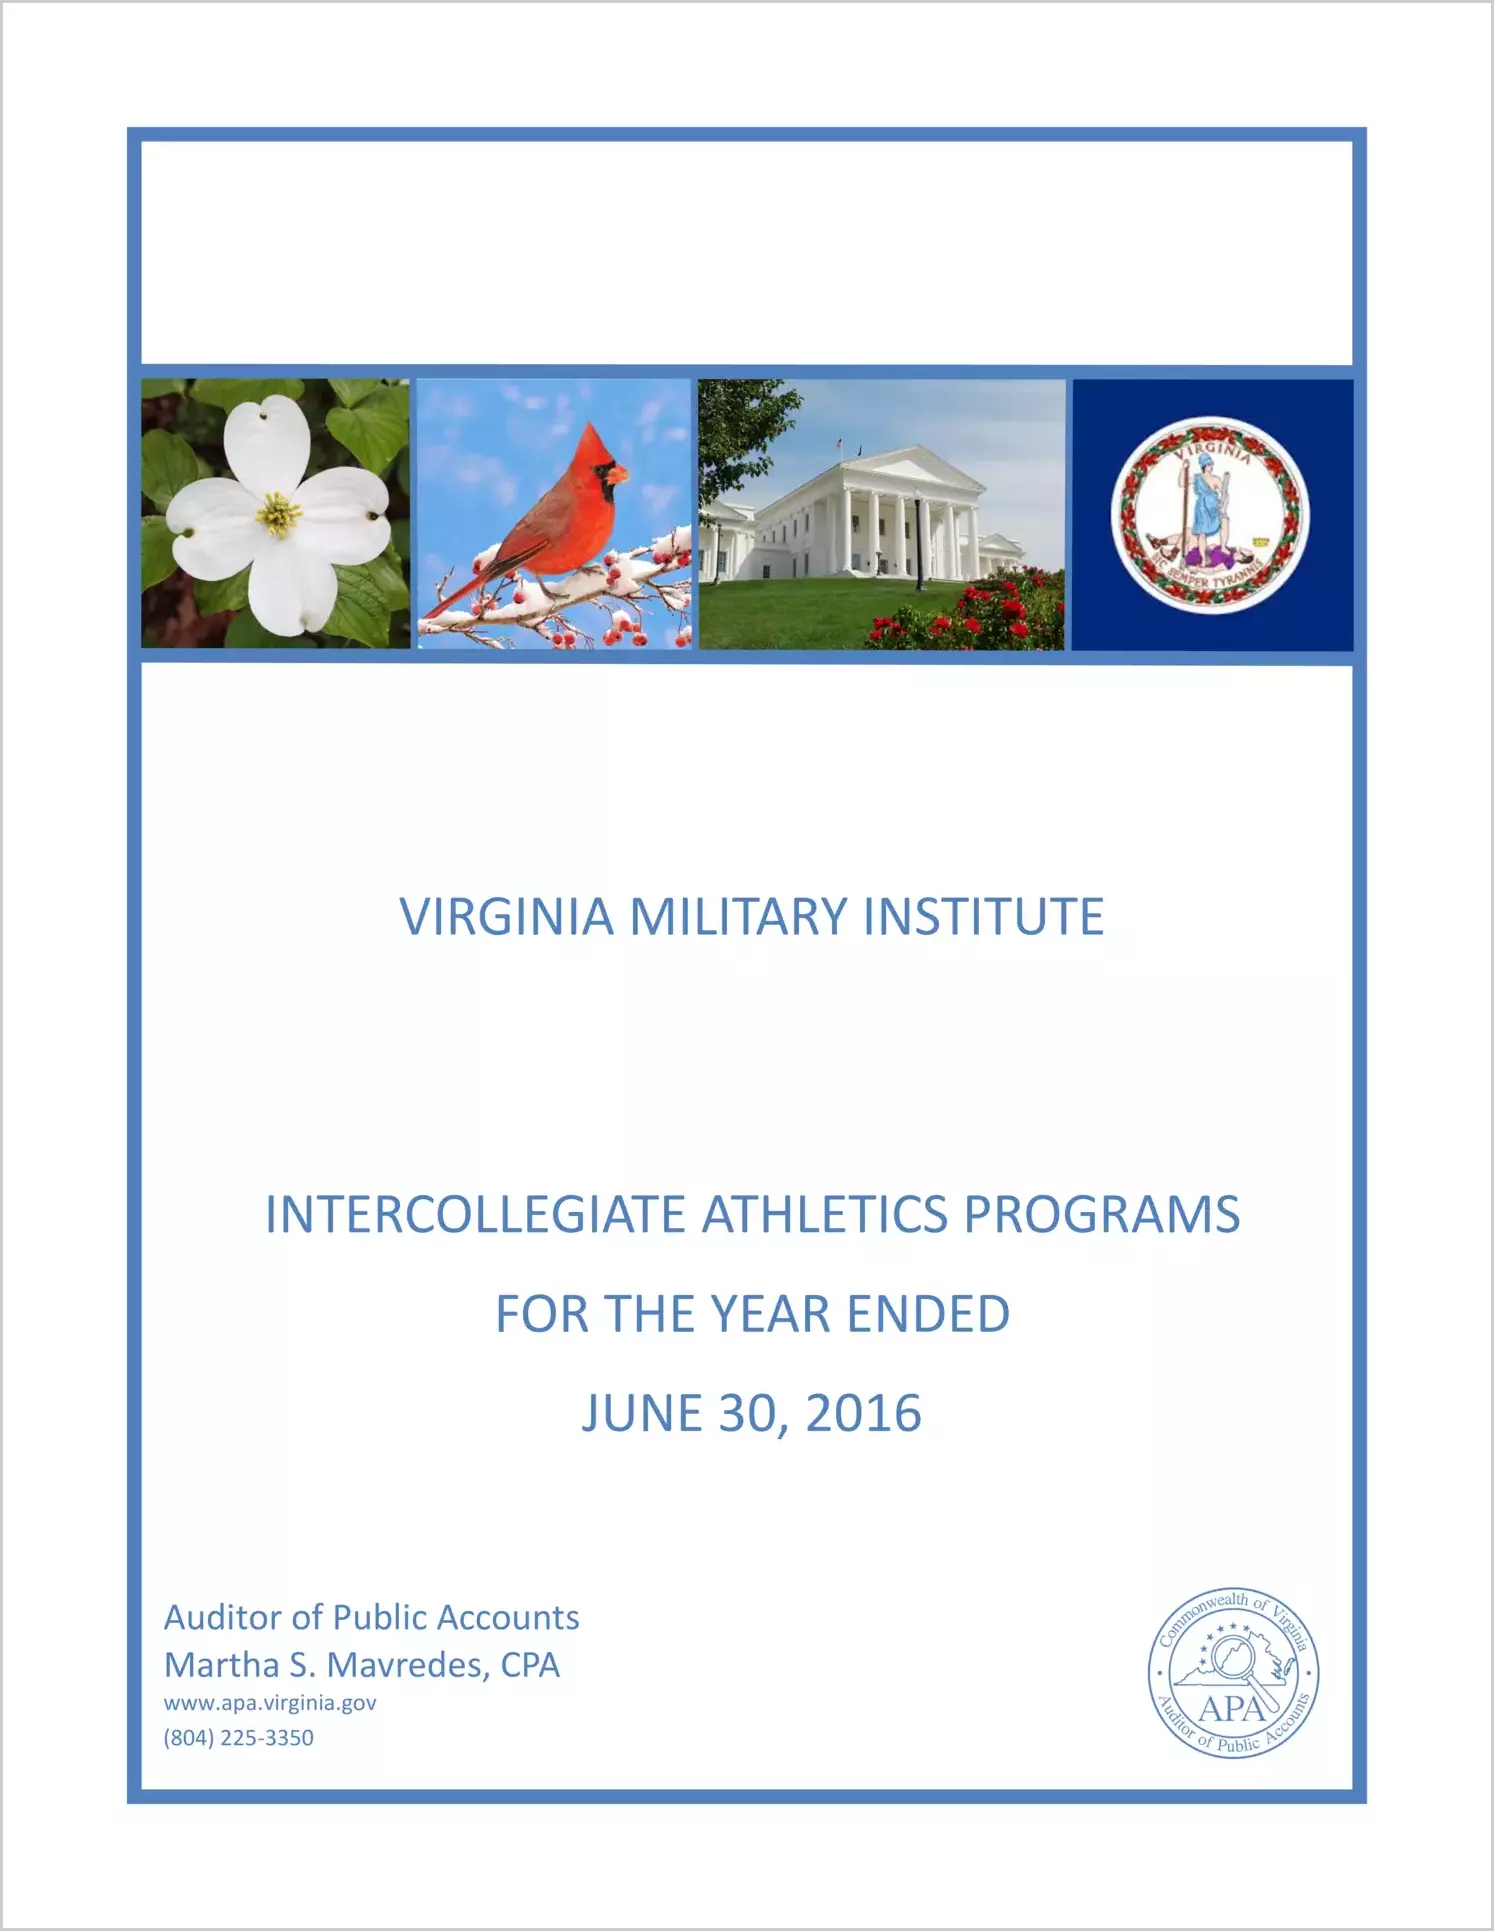 Virginia Military Institute Intercollegiate Athletics Programs for the year ended June 30, 2016